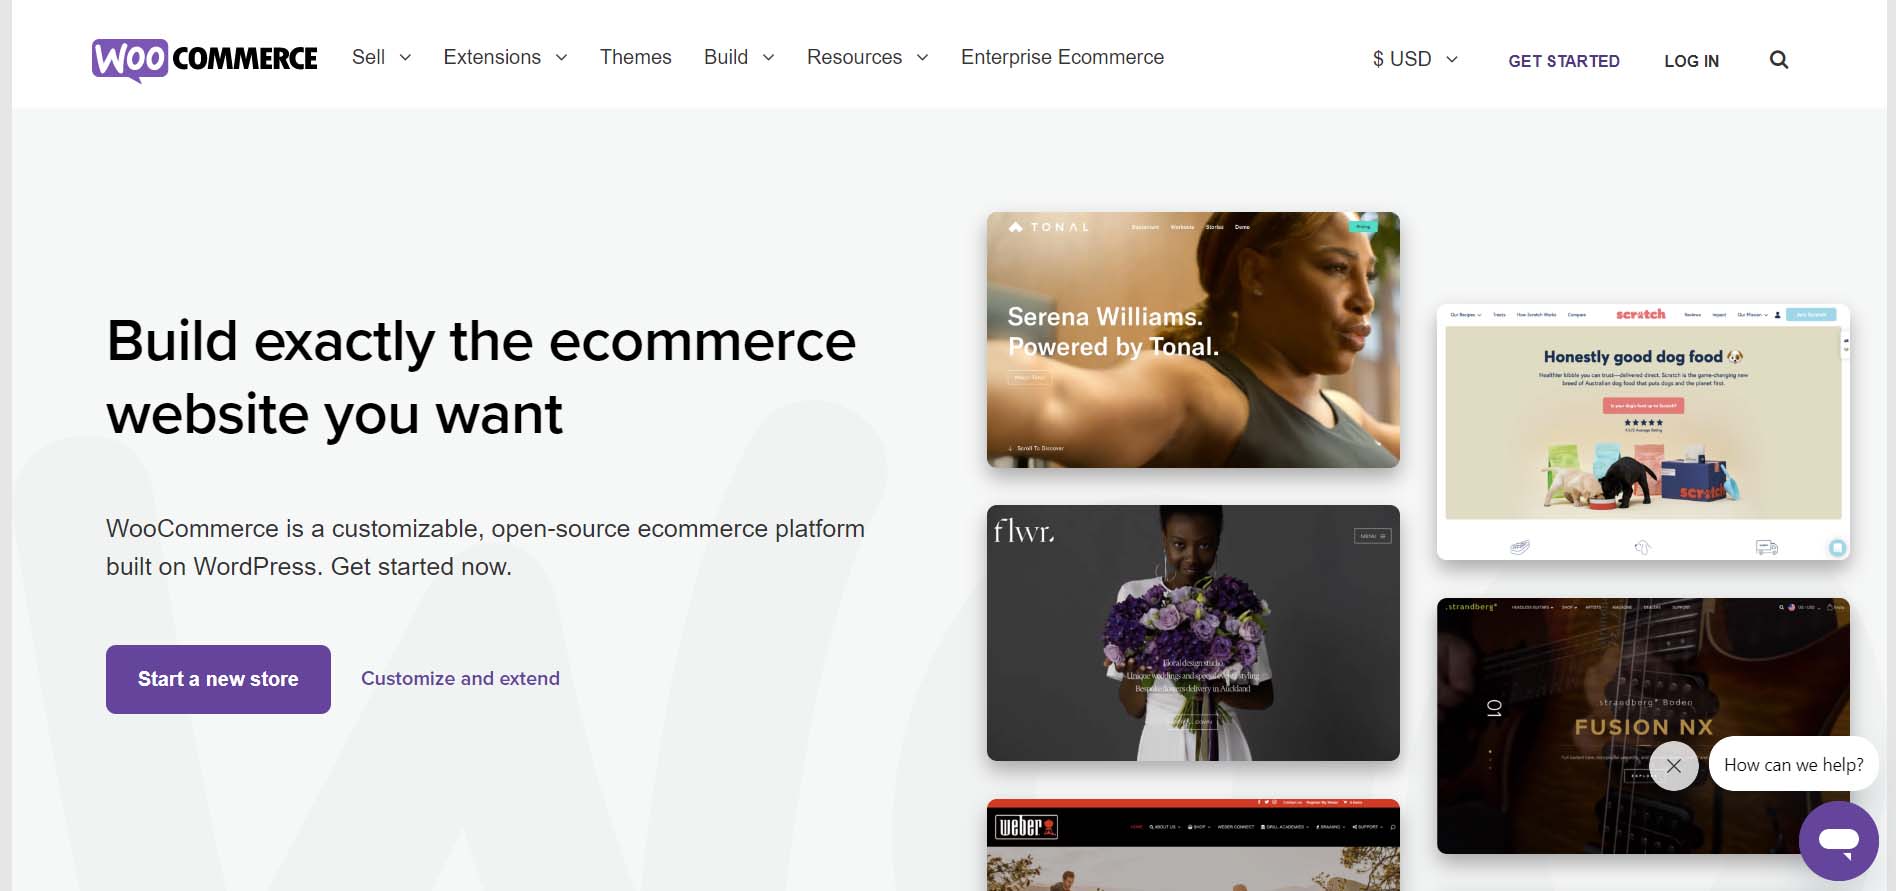 WooCommerce eCommerce platform